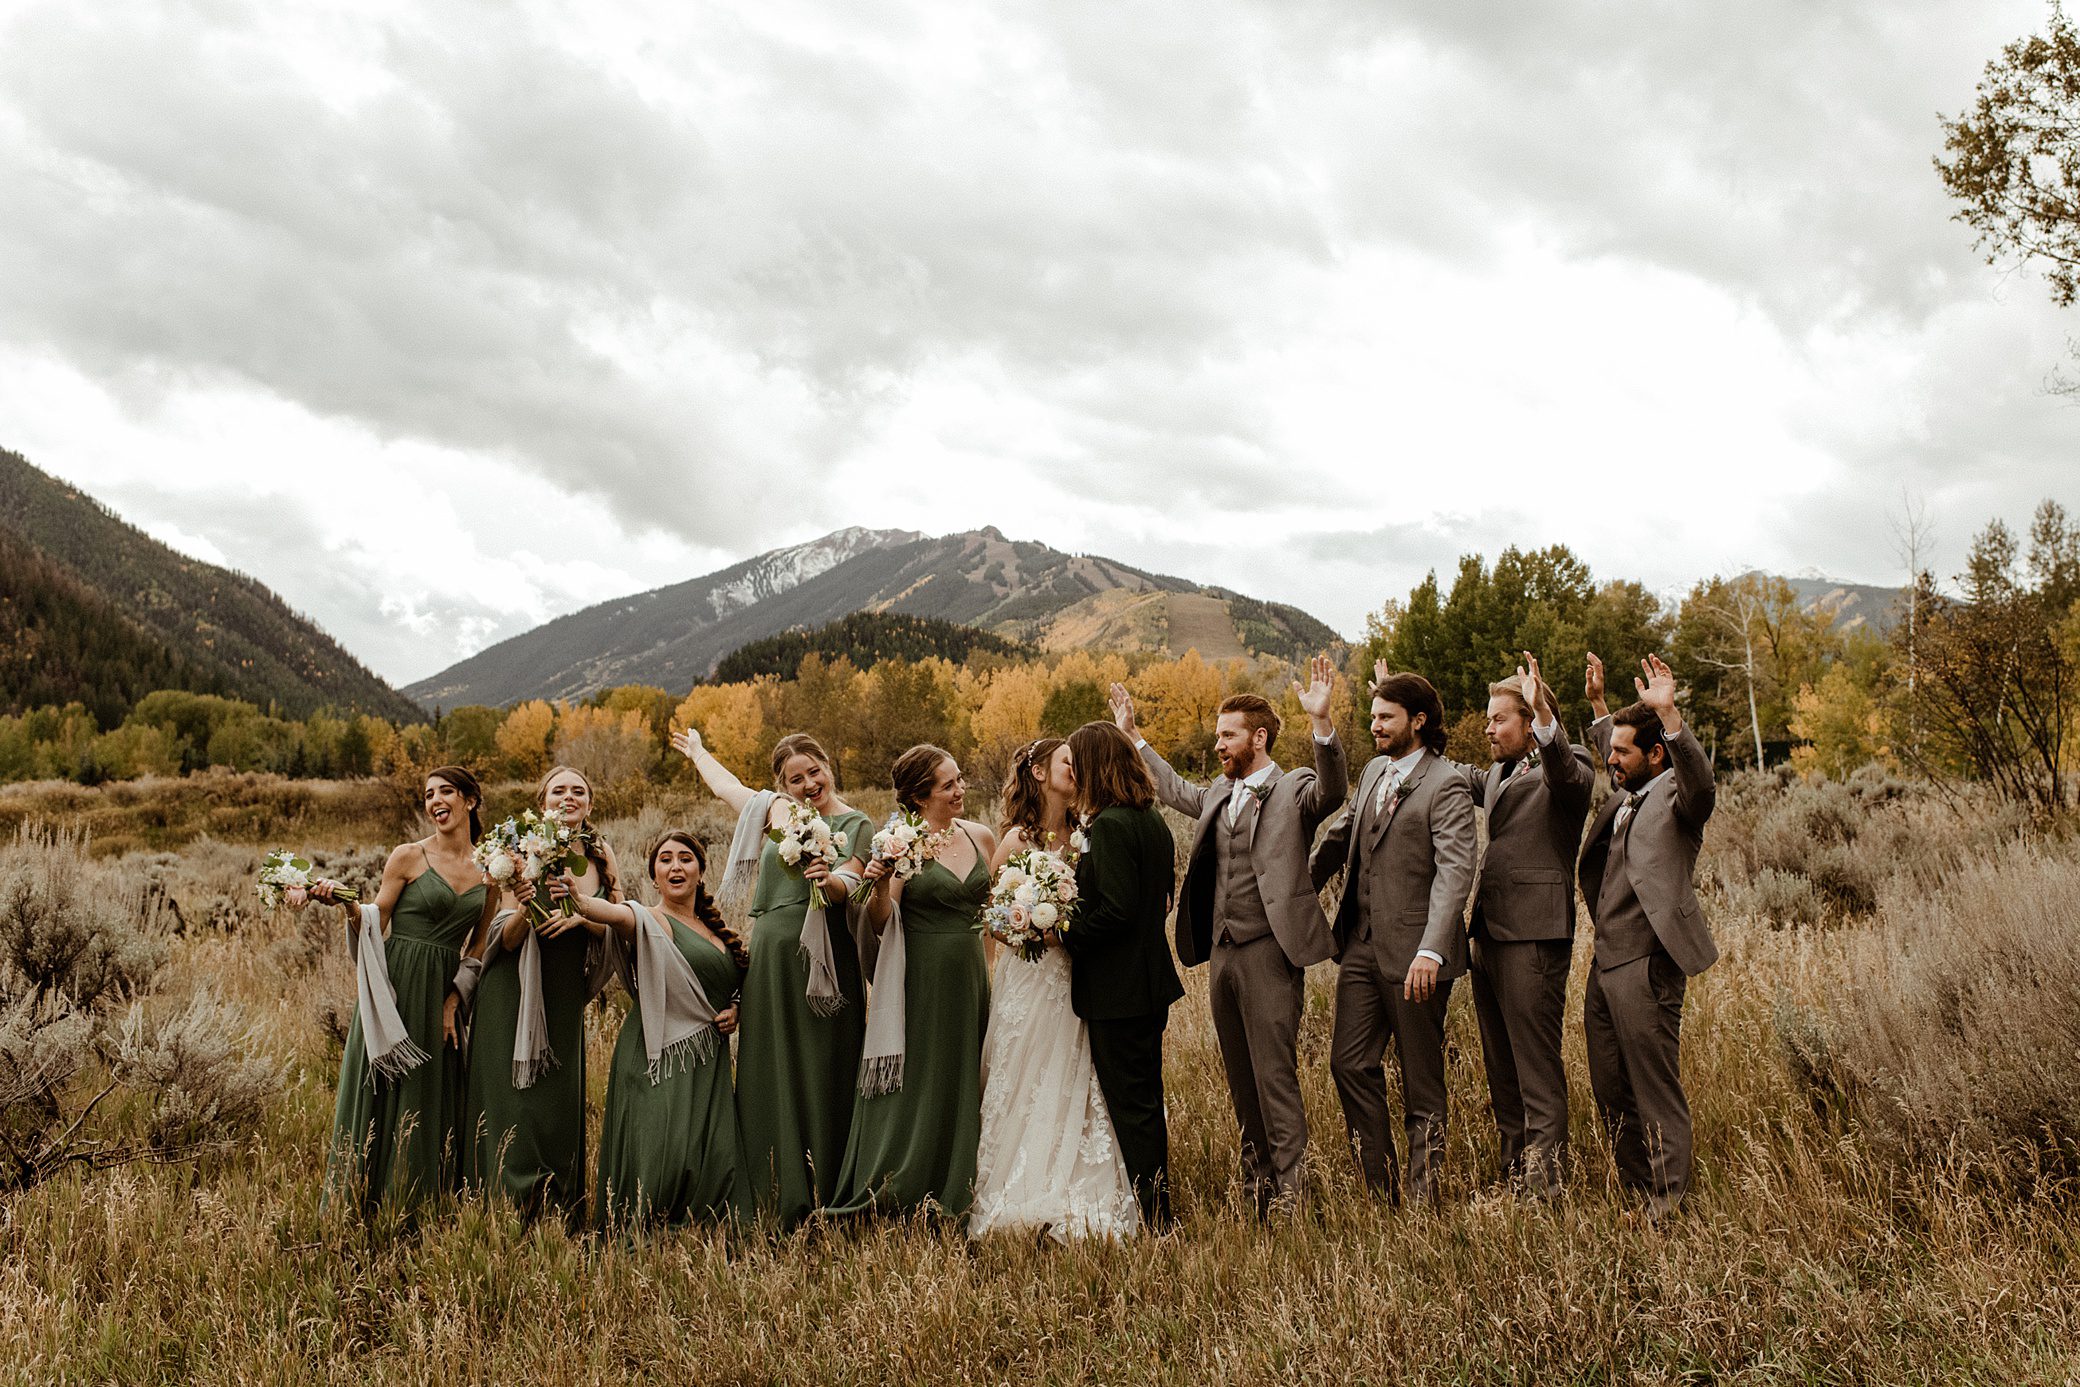 A wedding party at Aspen Meadows Resort